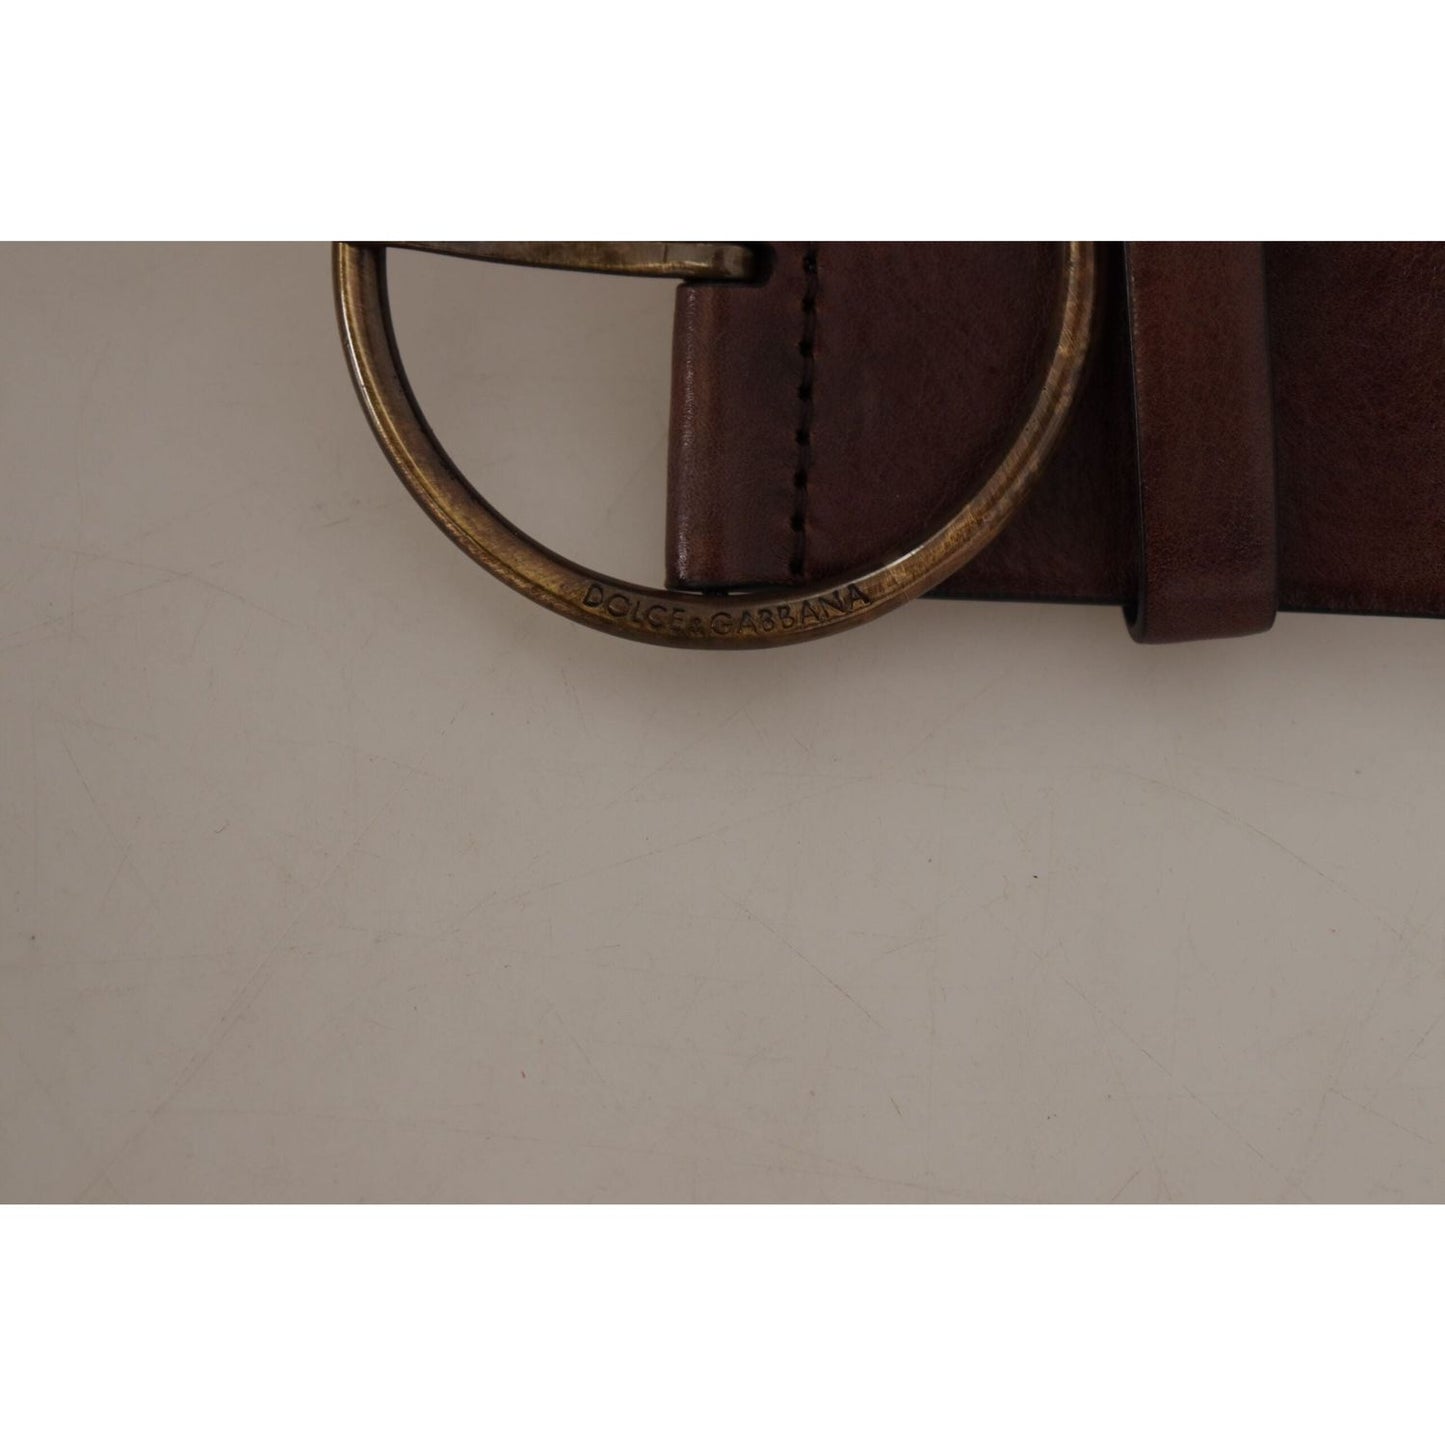 Dolce & Gabbana Elegant Leather Belt with Engraved Buckle dark-brown-wide-waist-leather-metal-round-buckle-belt